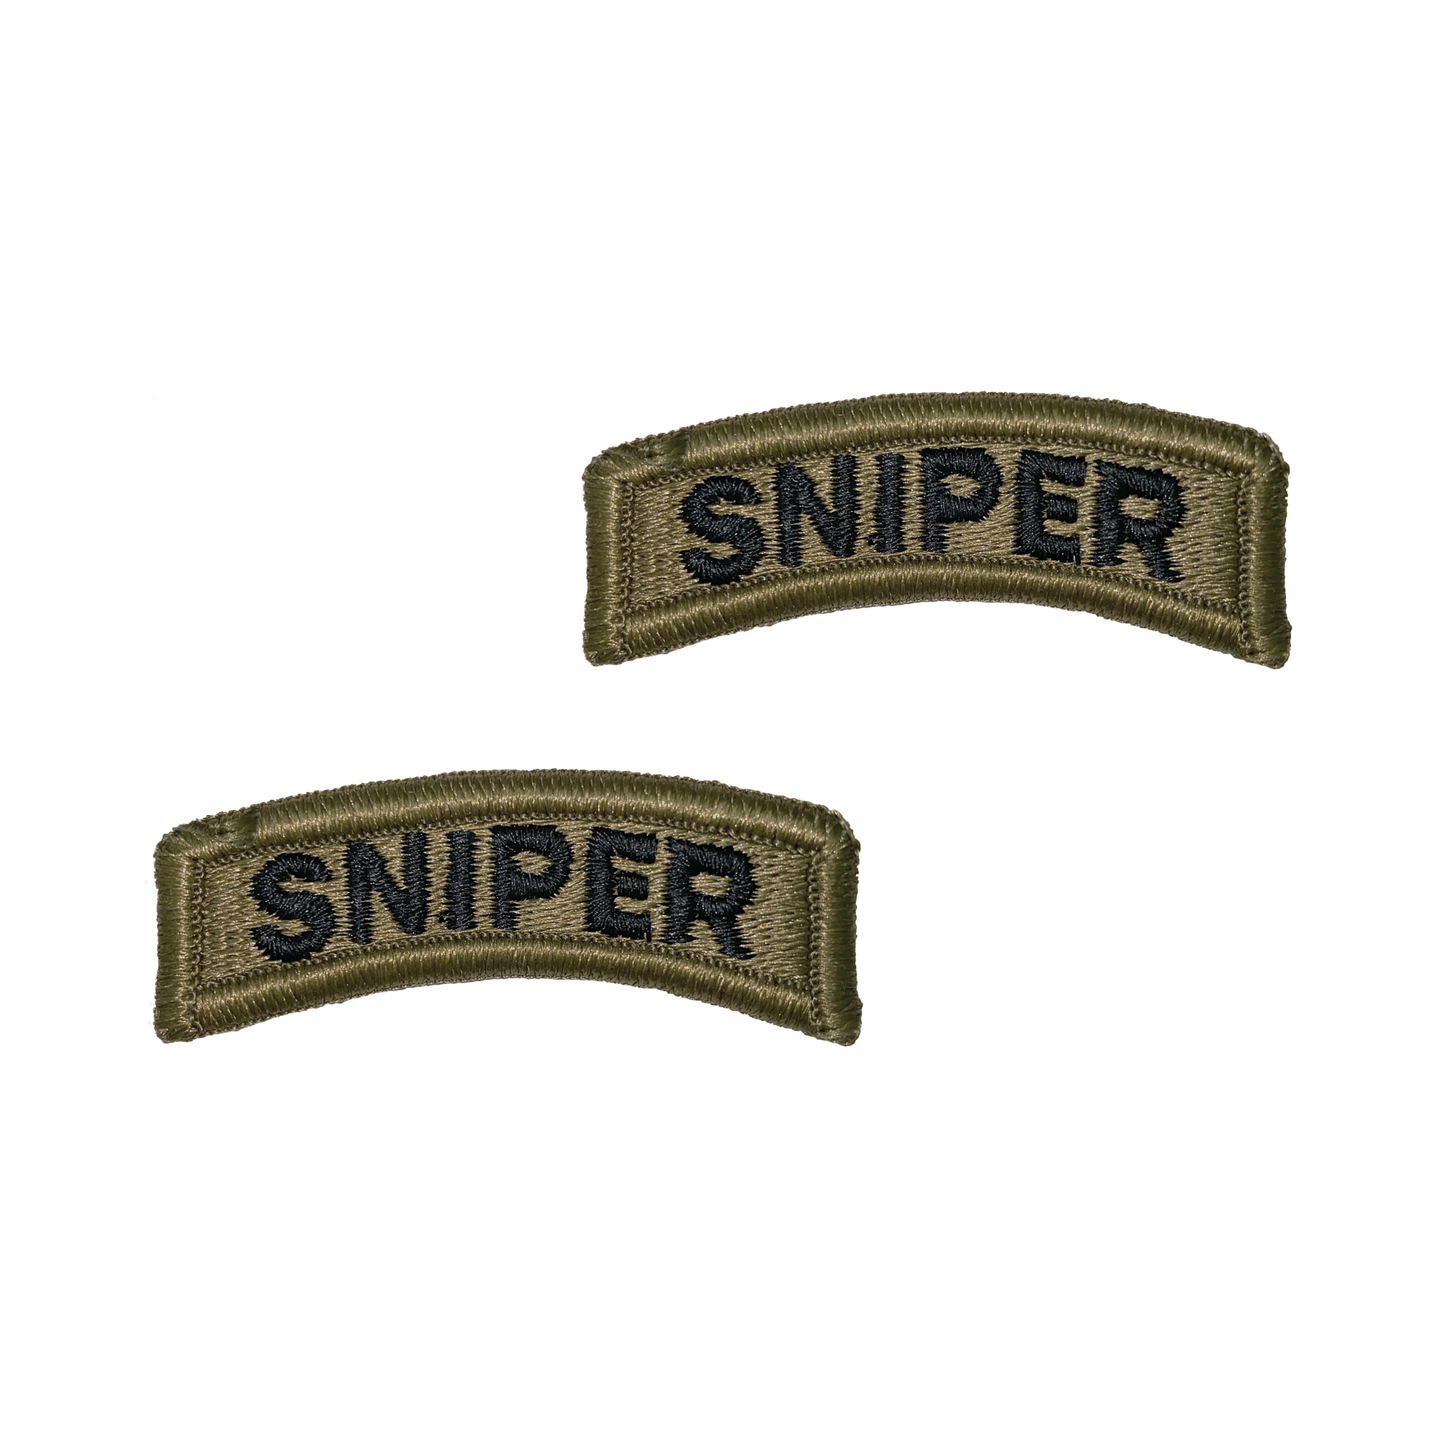 Sniper OCP Tab with Hook Fastener (Prs)